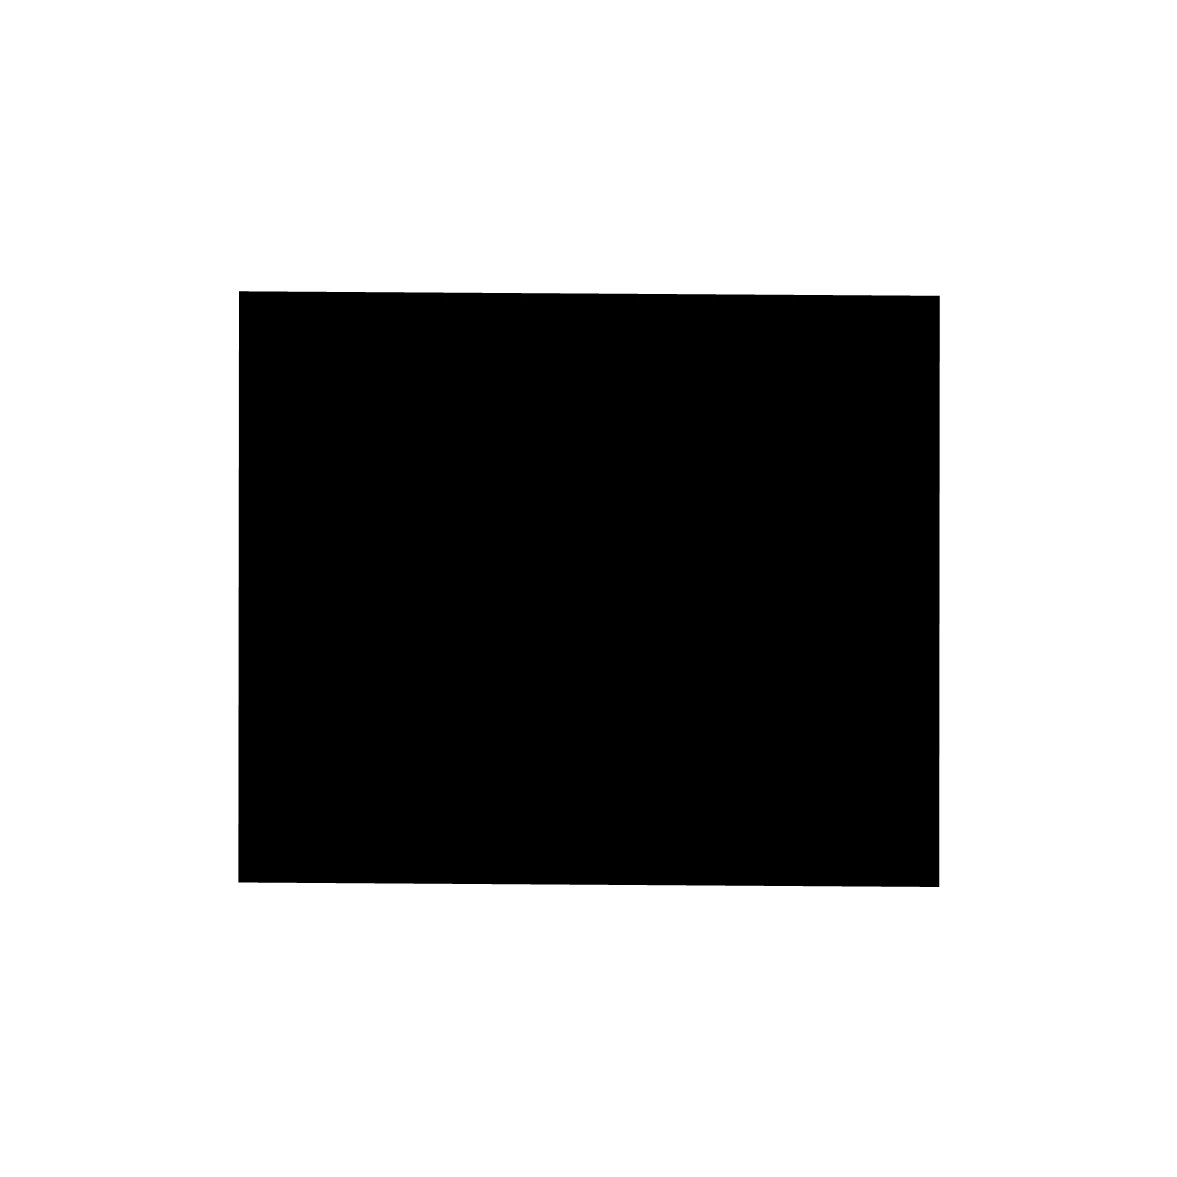 Moosgummidichtung vierkant | 30 mm Höhe | Farbe: schwarz